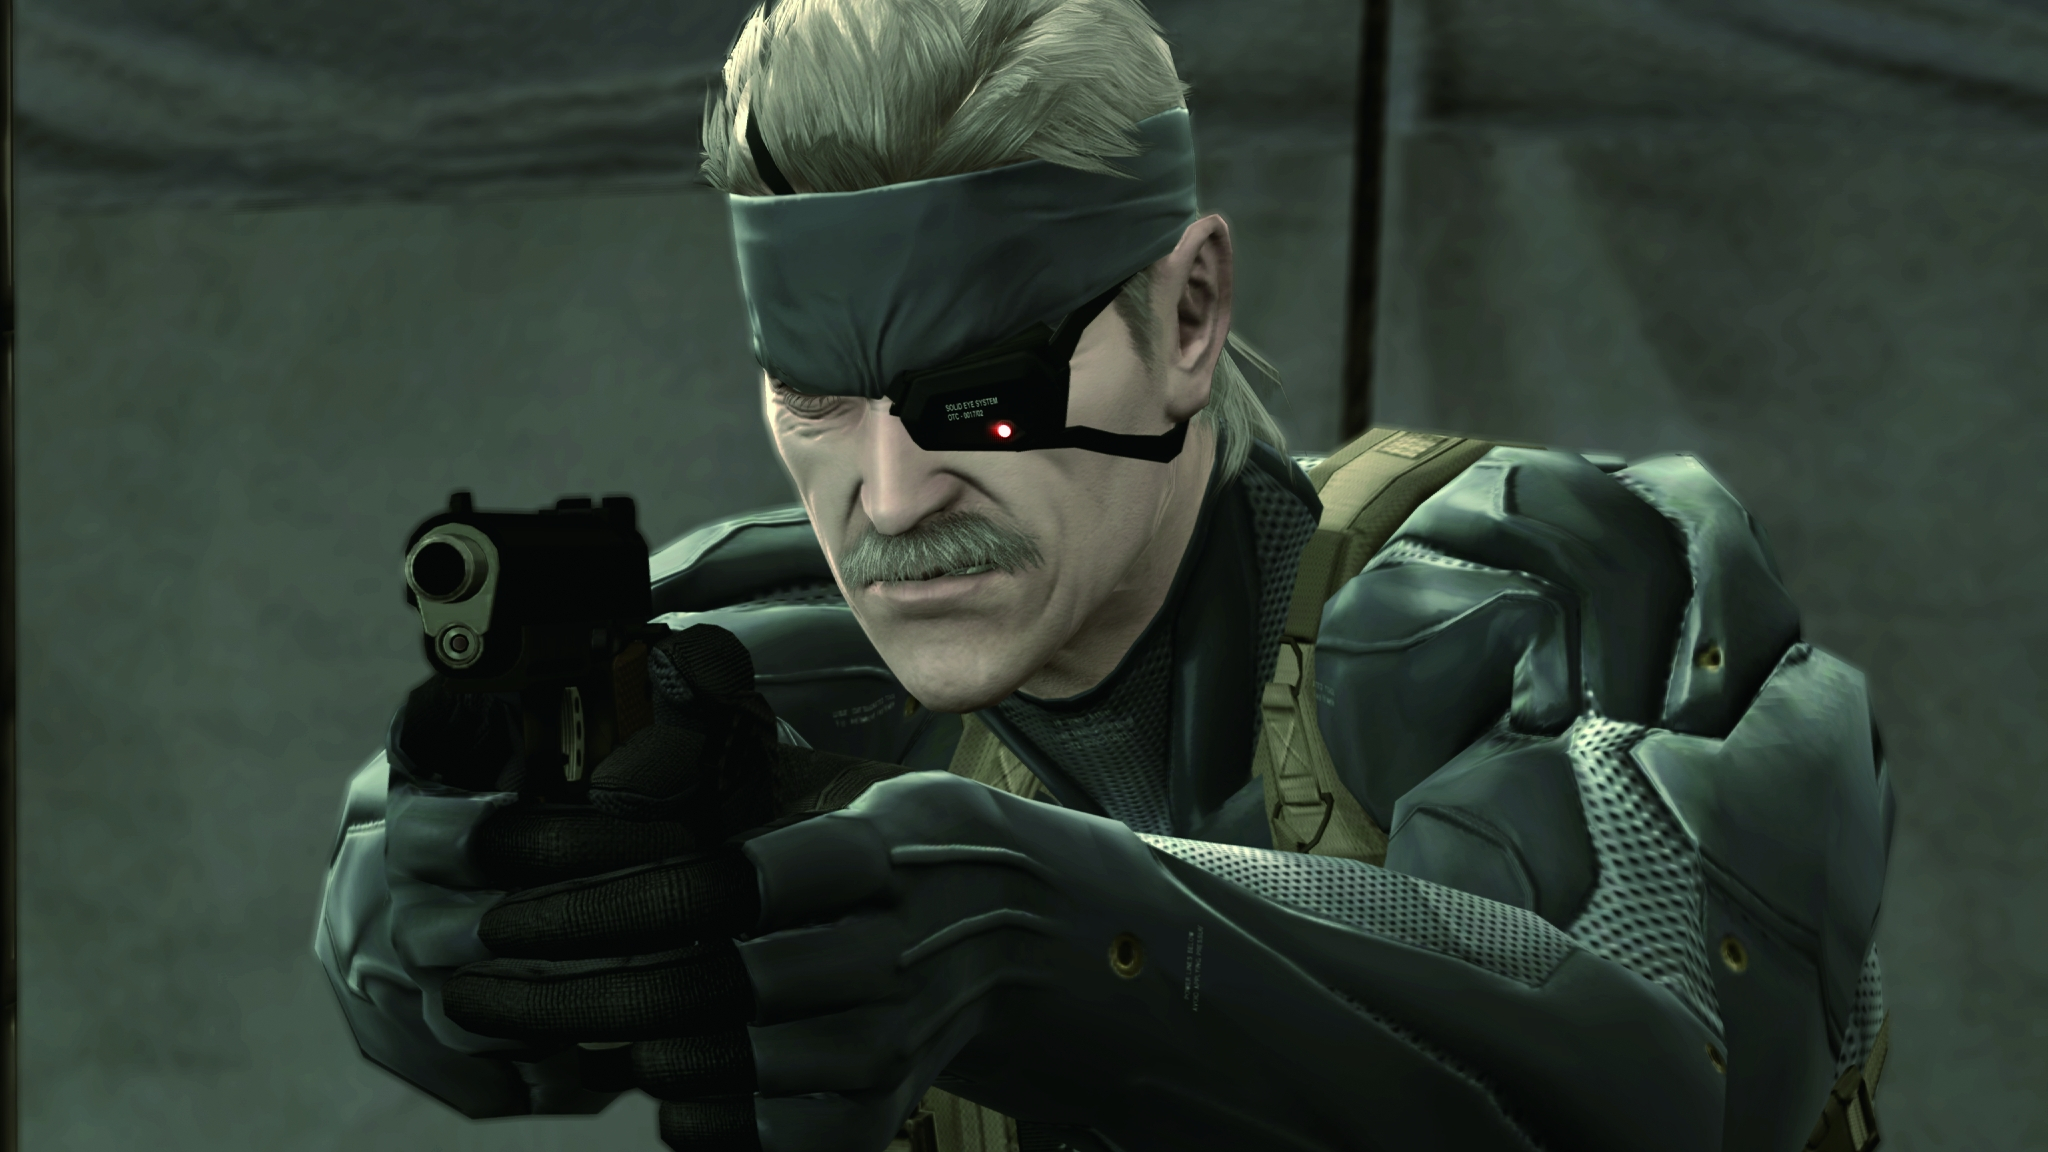 Konami website hints at Metal Gear Solid 4 releasing on other platforms